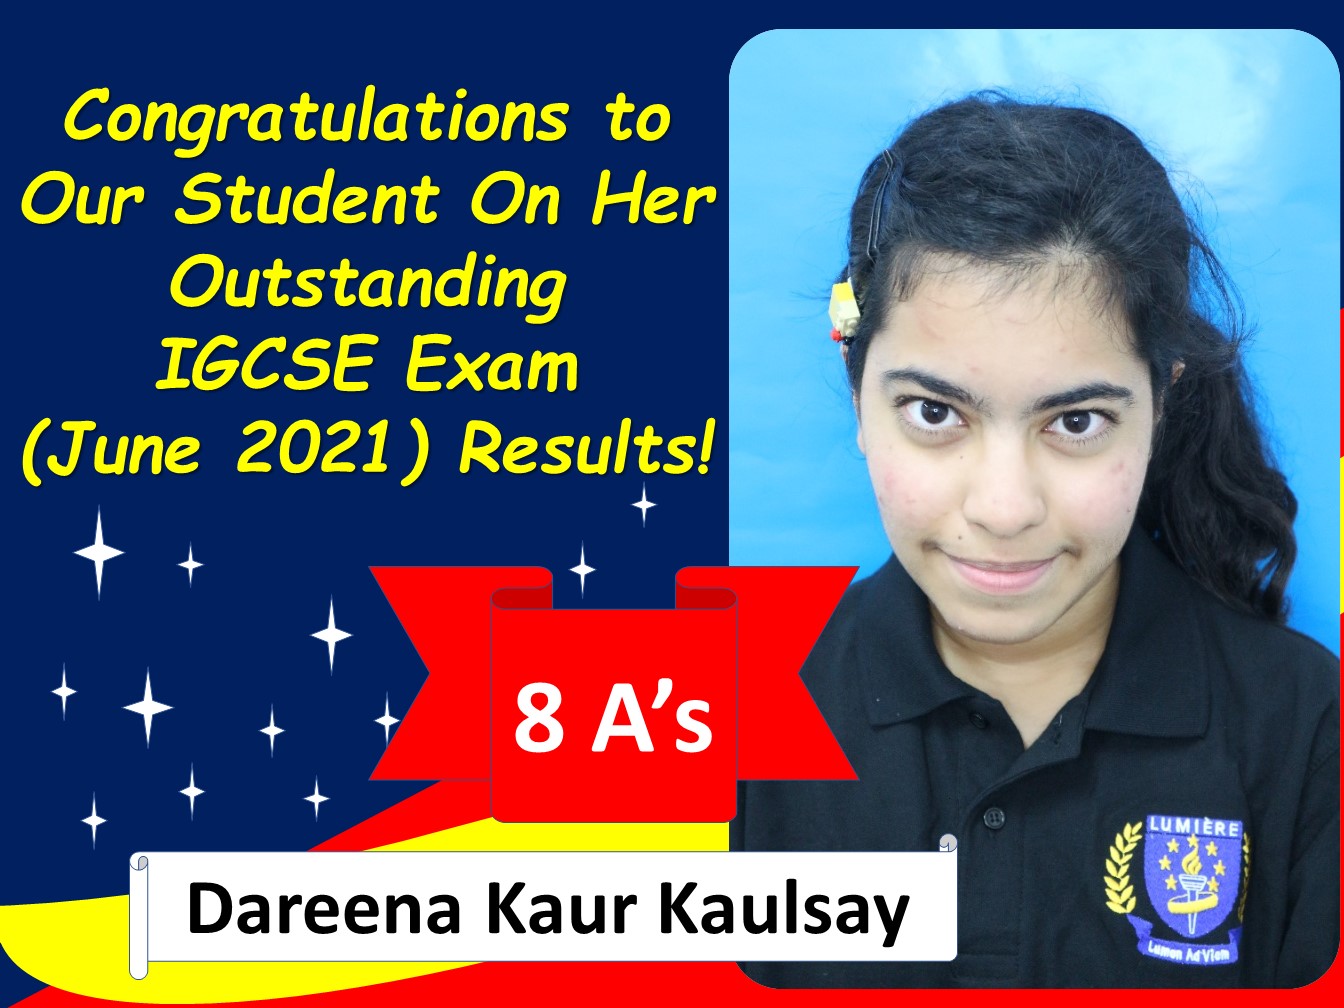 387-dareena-outstanding-igcse-results-lumiere-homeschool.jpg